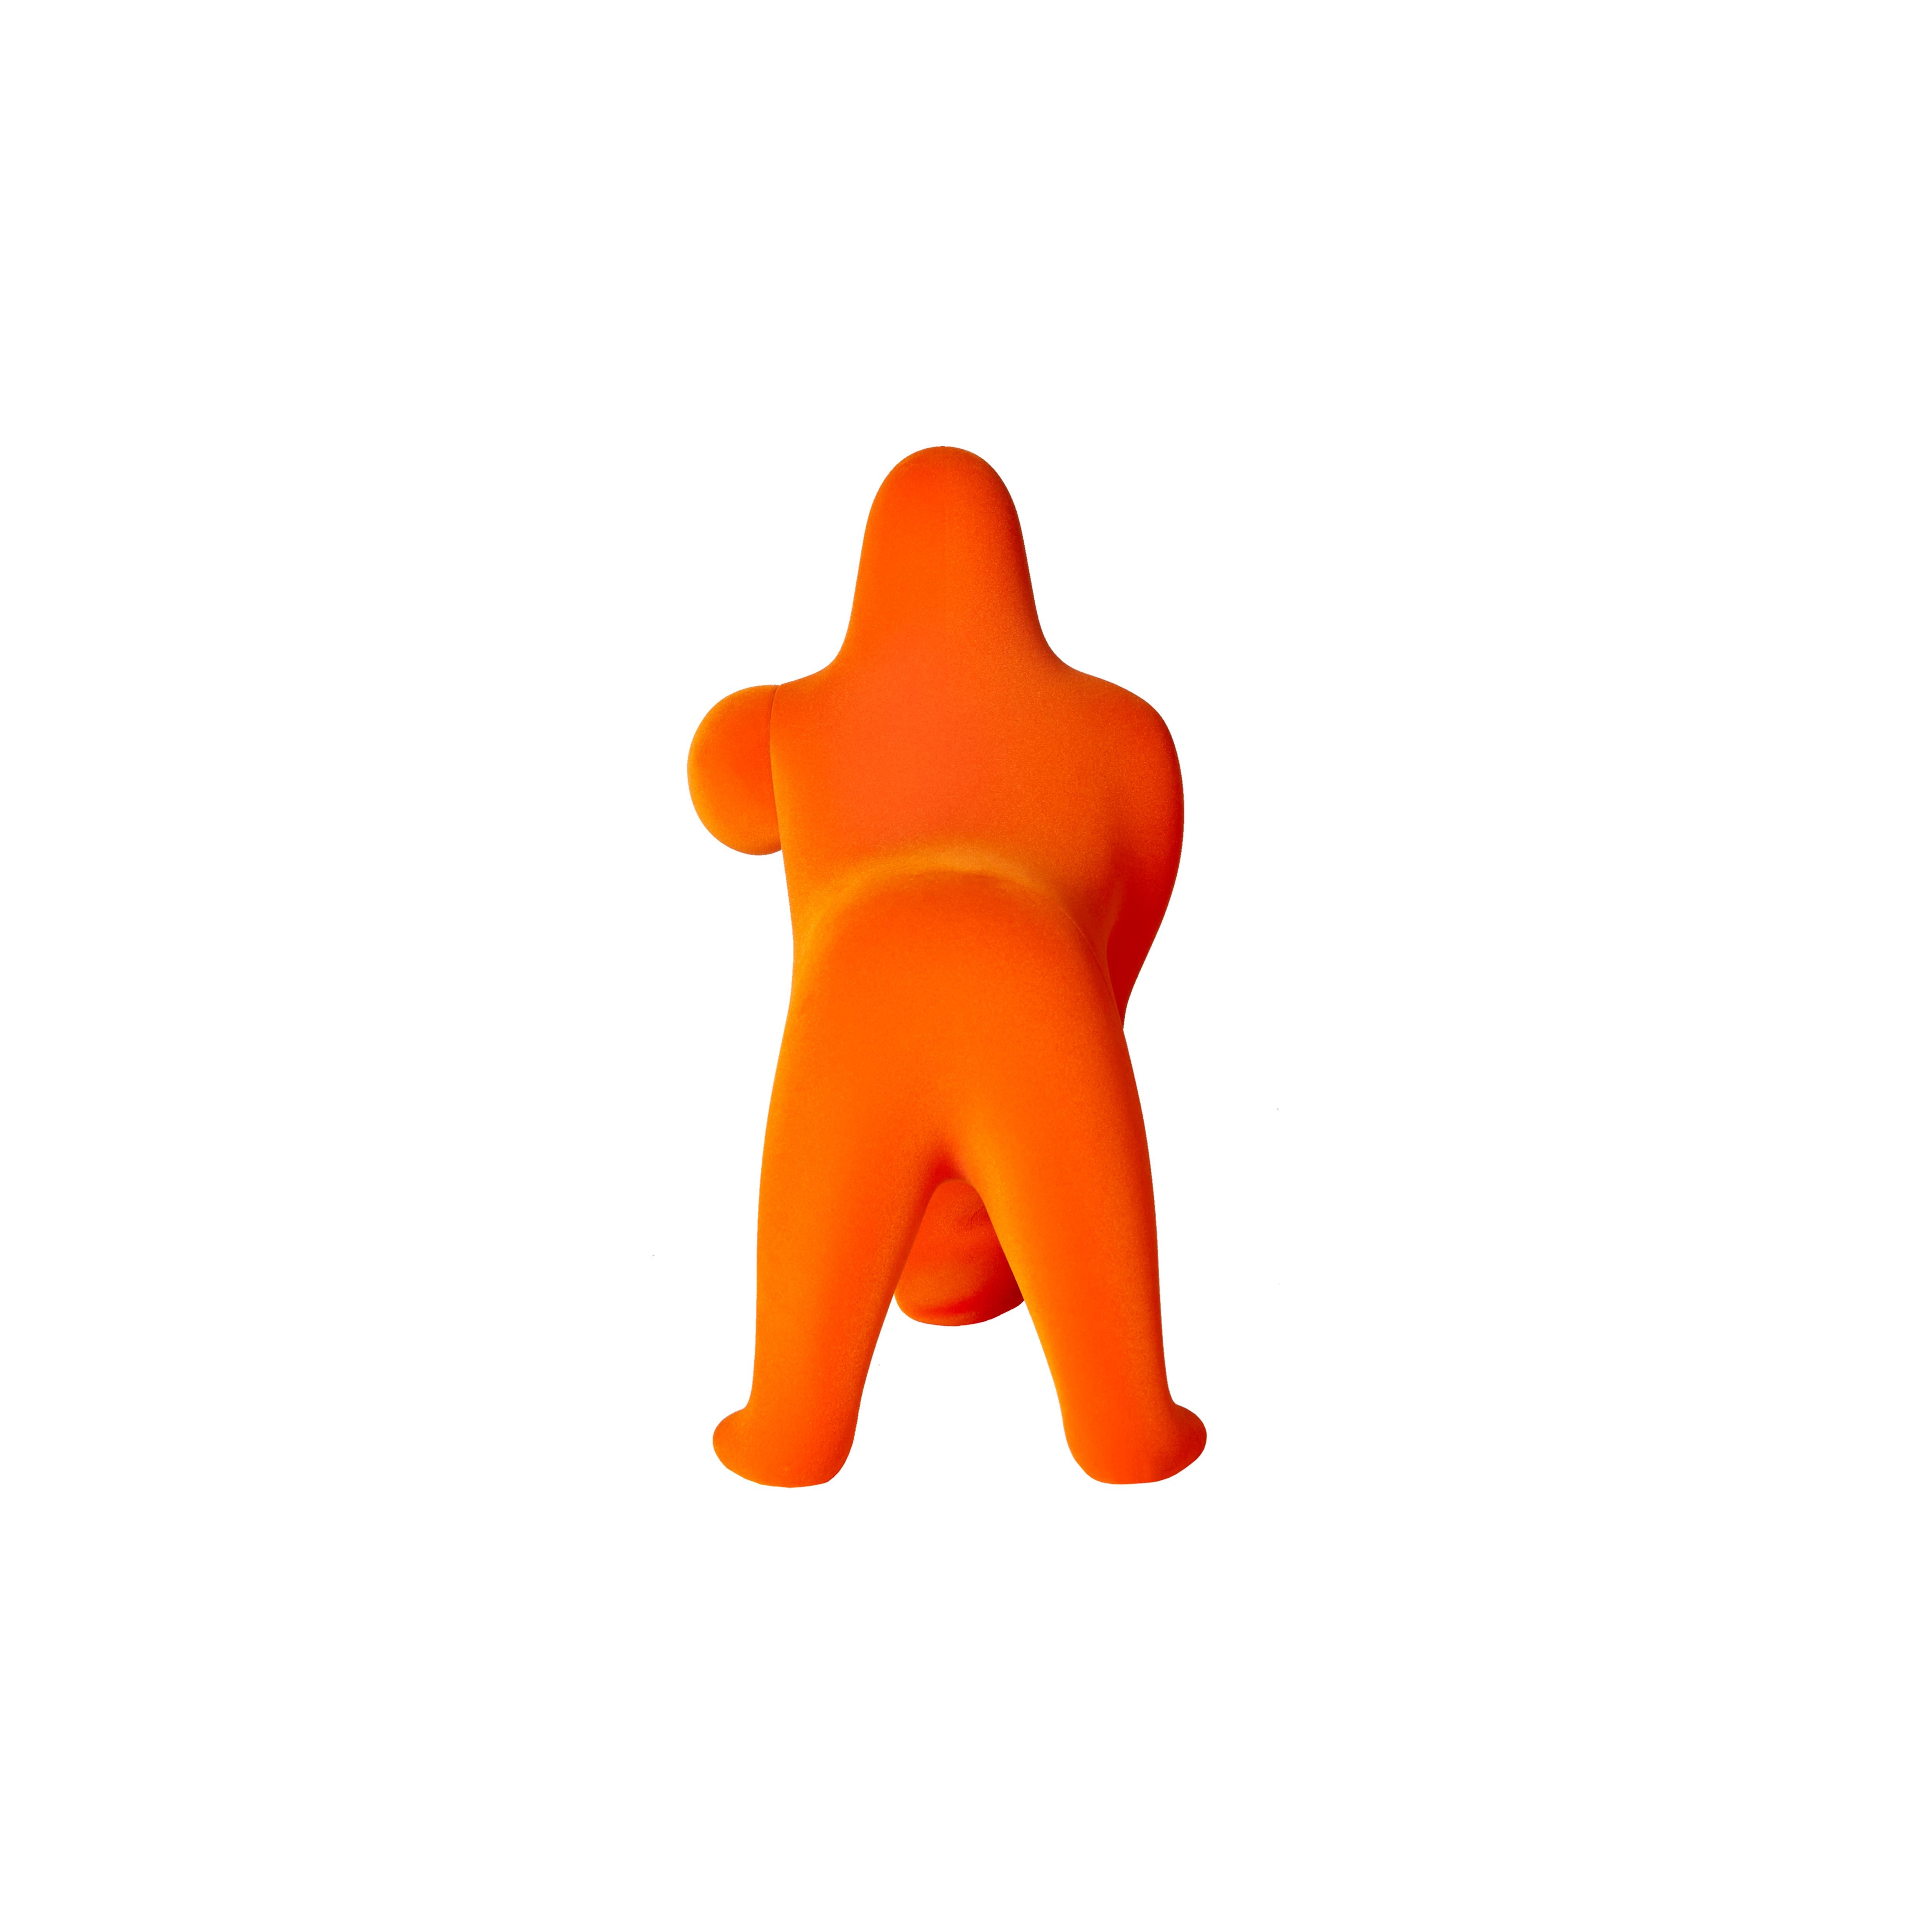 En vente : Orange Petite lampe de table ou lampadaire moderne sculpturale en velours orange Gorilla 4